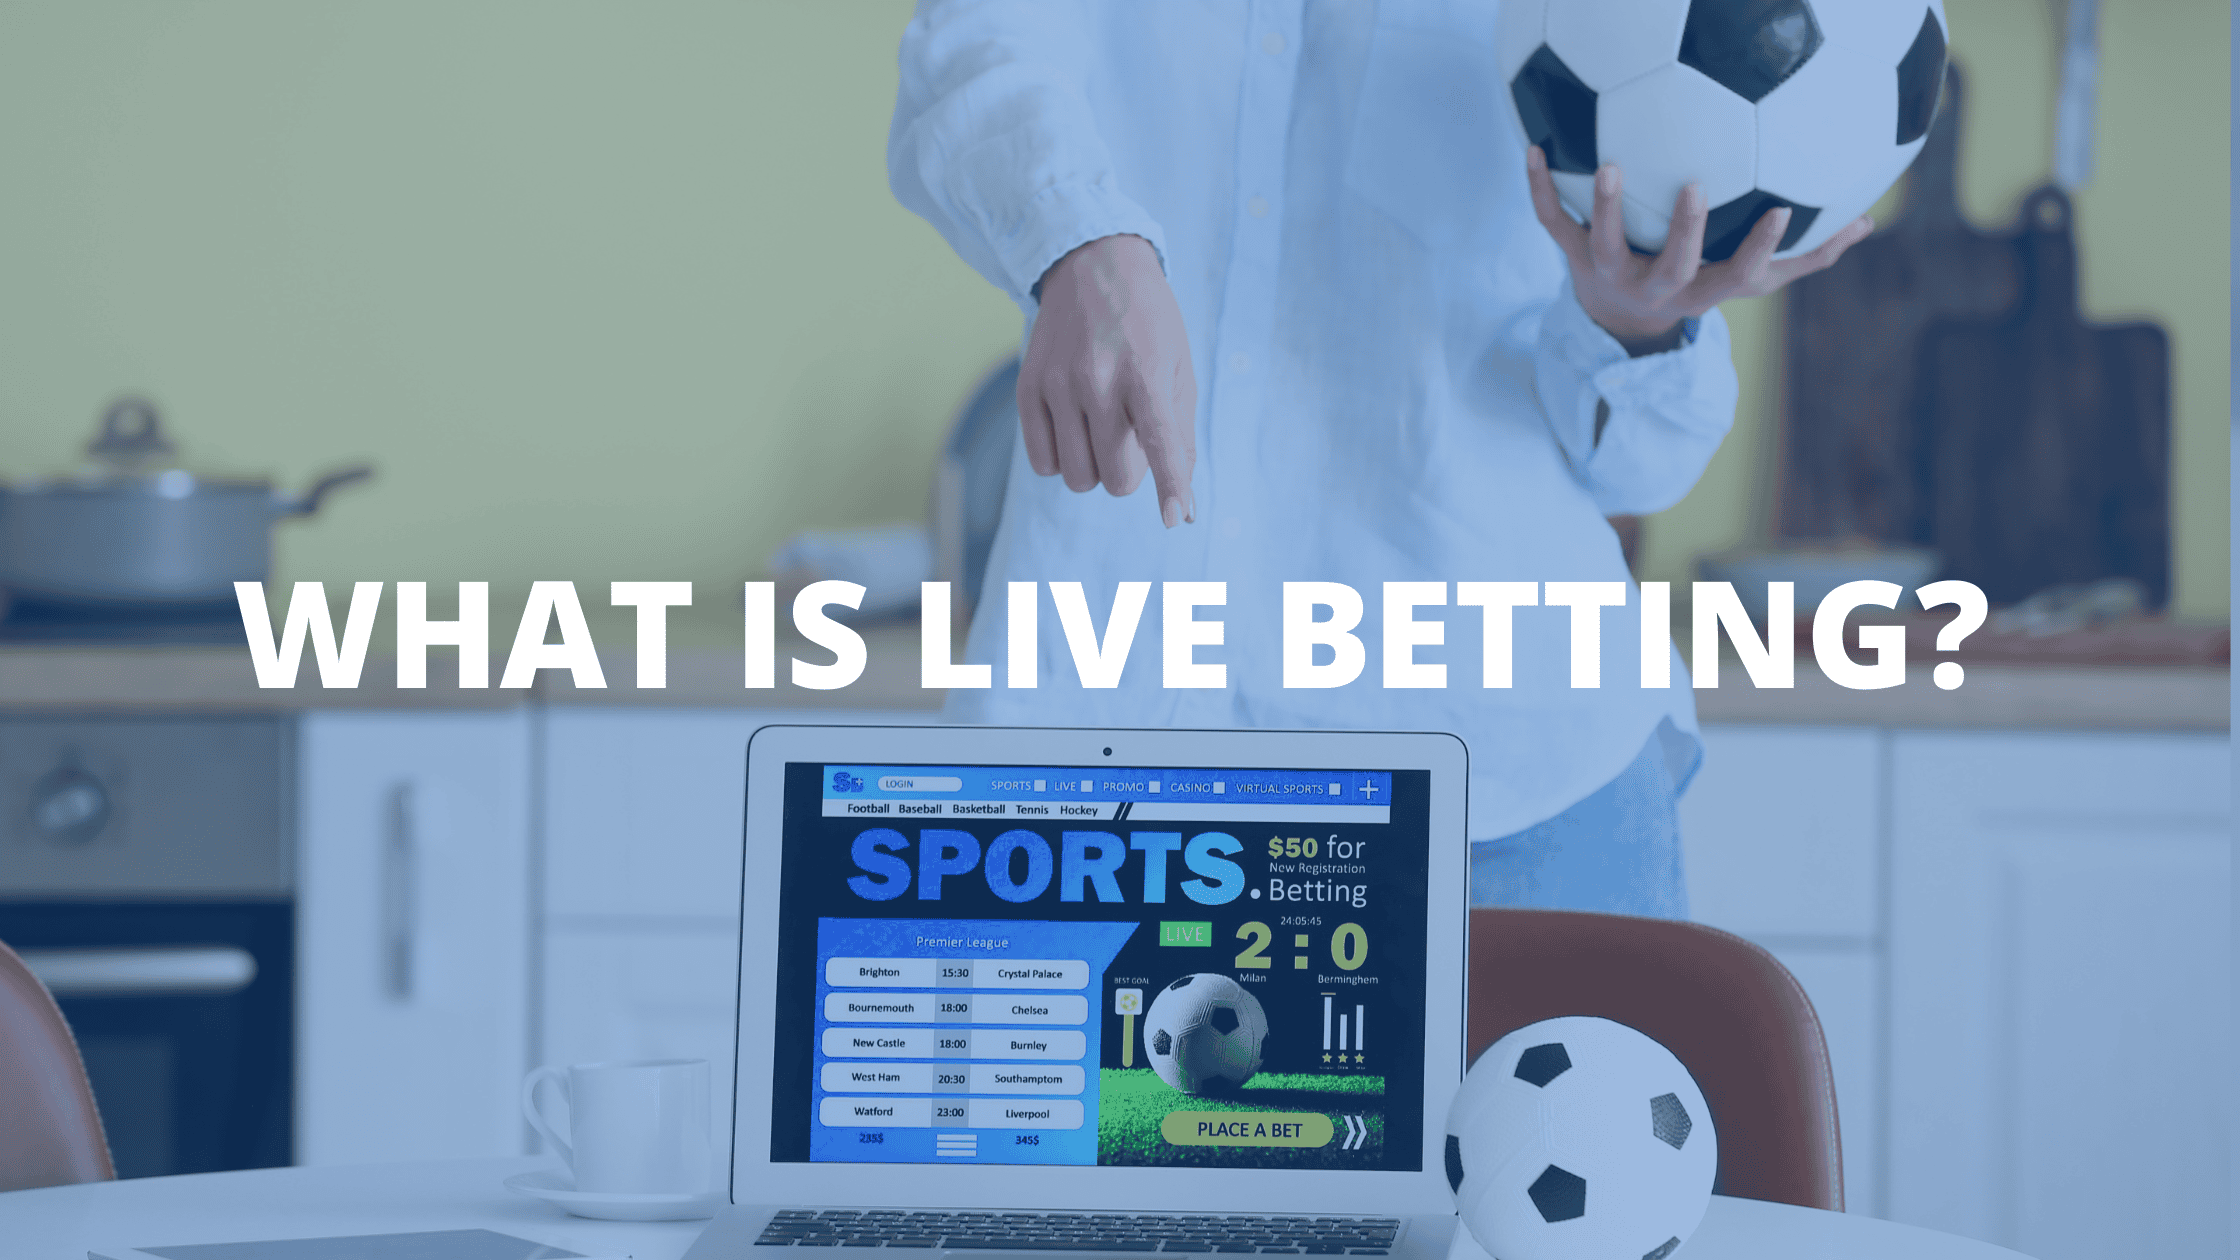 live betting